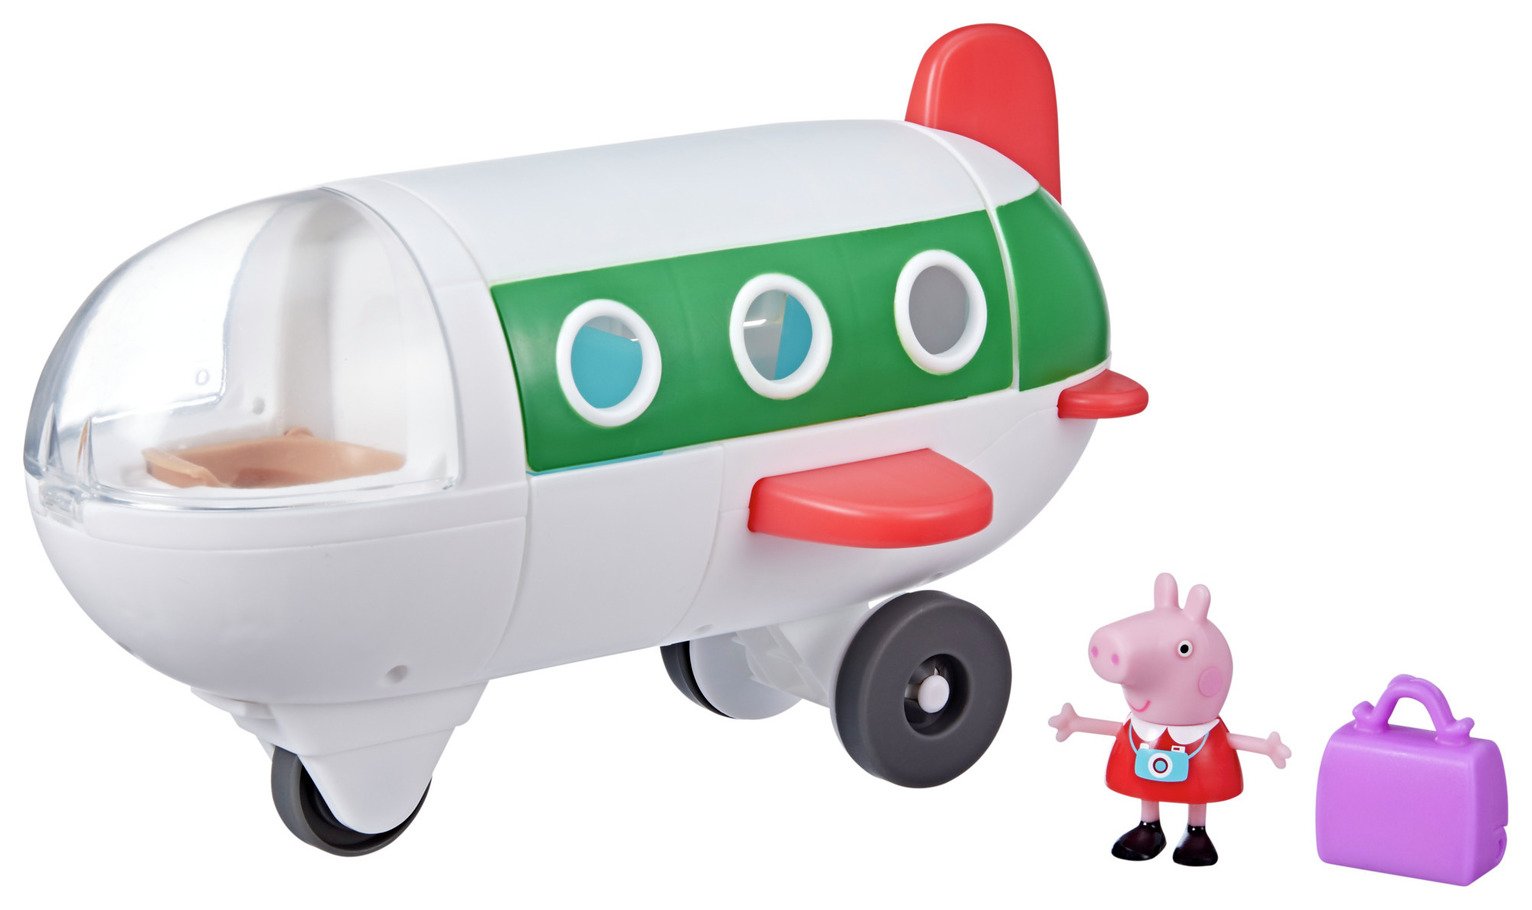 Peppa Pig Peppa's Adventures Air Peppa Aeroplane review